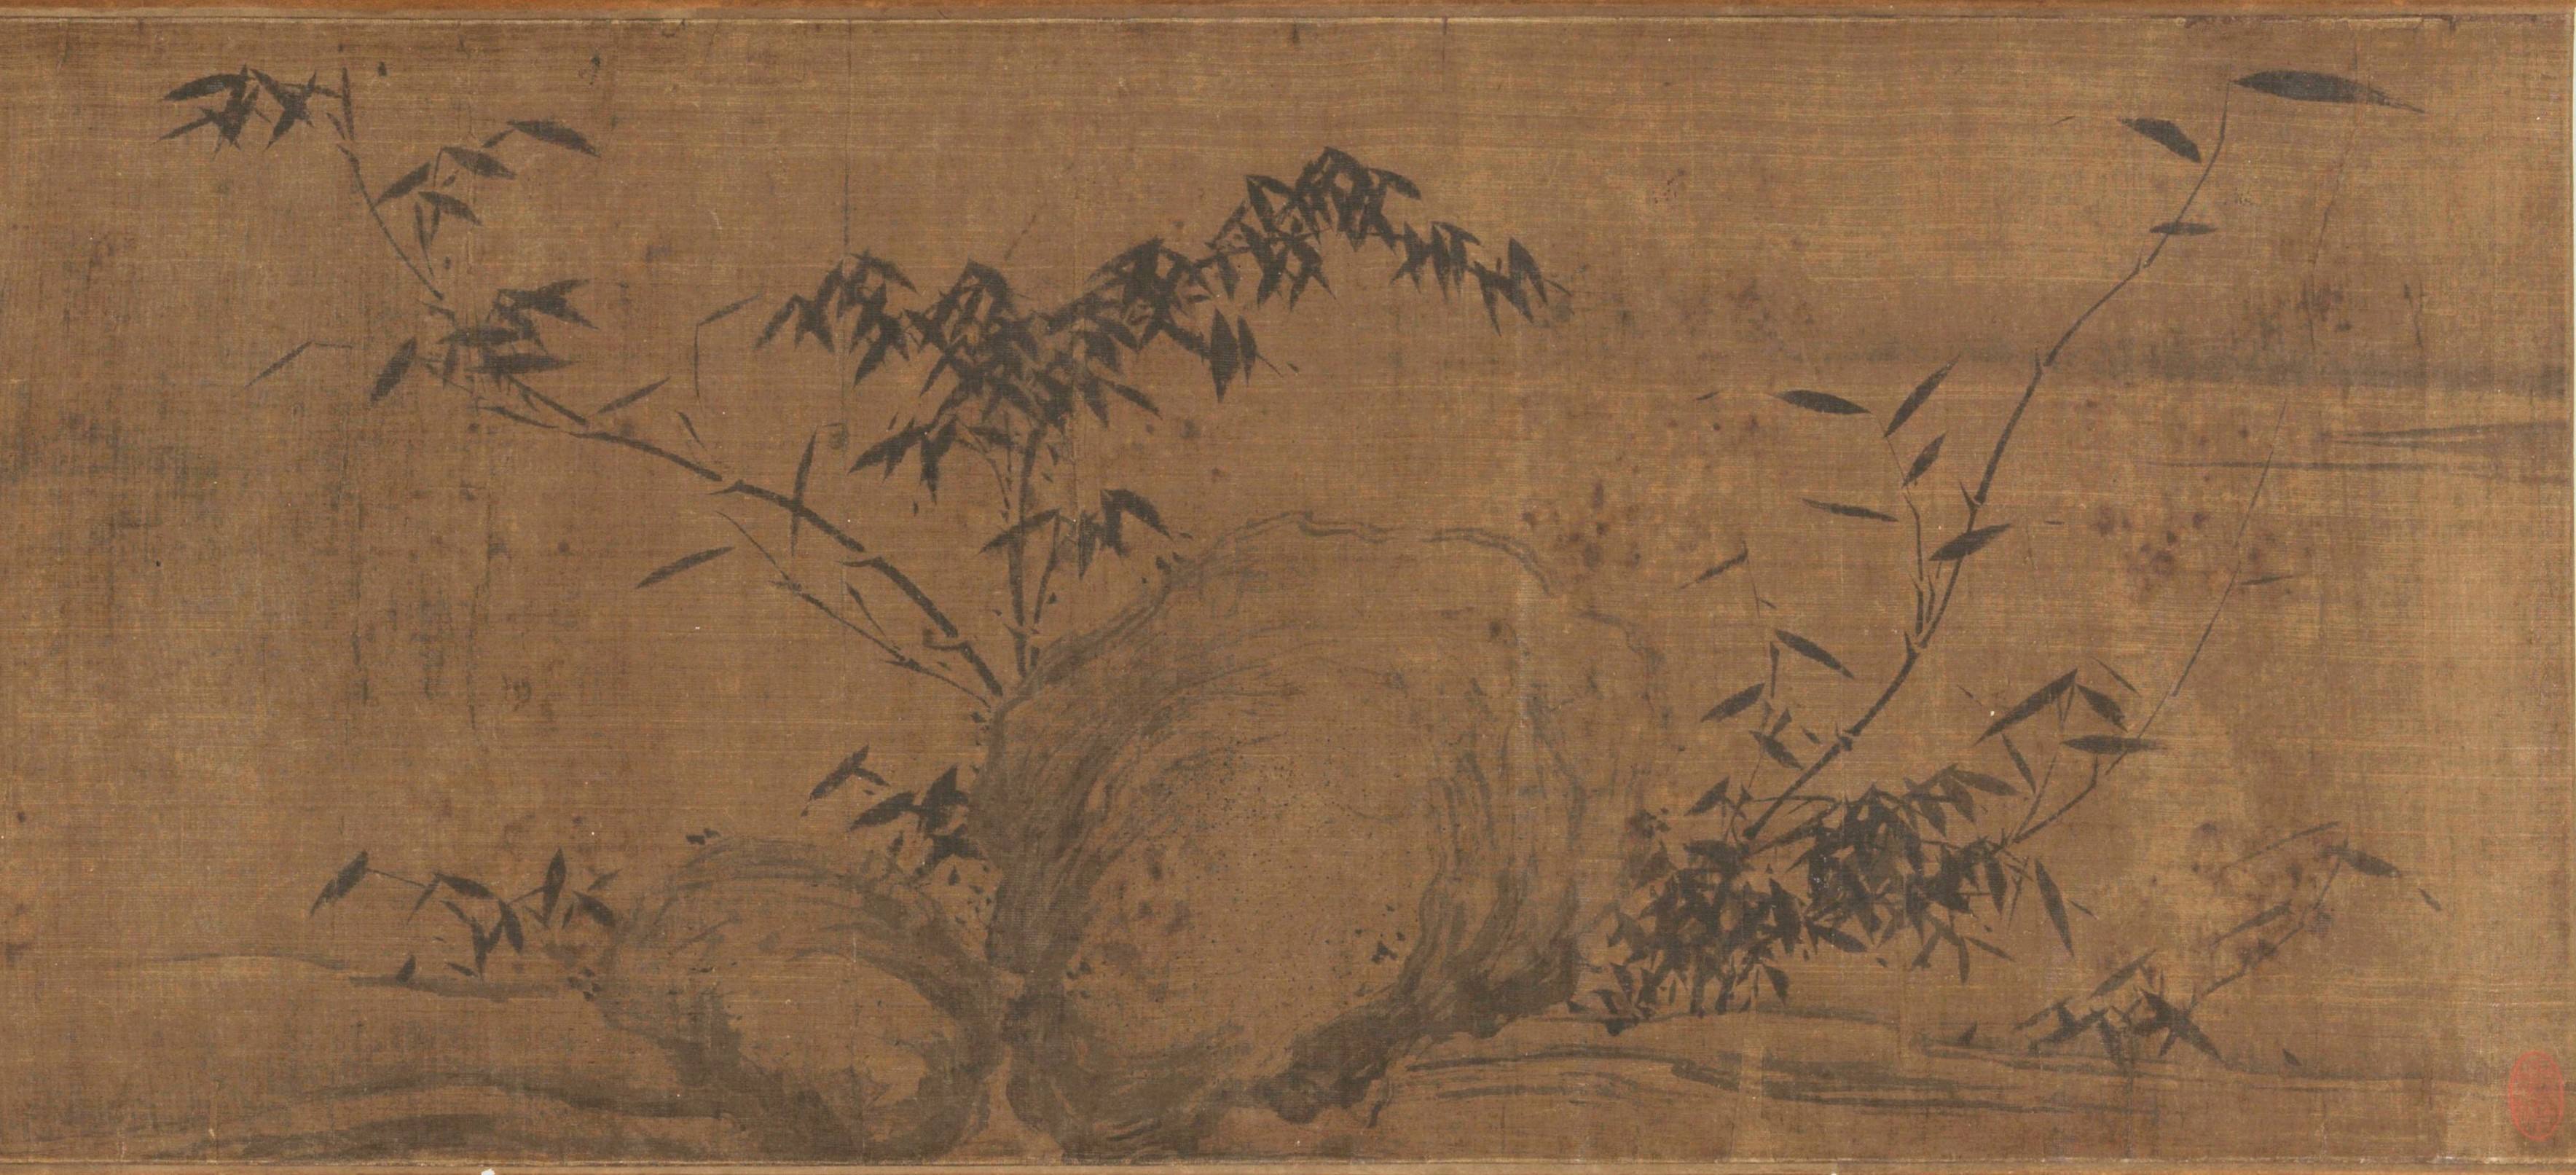 Su Shi's "Bamboo and Stone in Xiaoxiang" (biography) detail